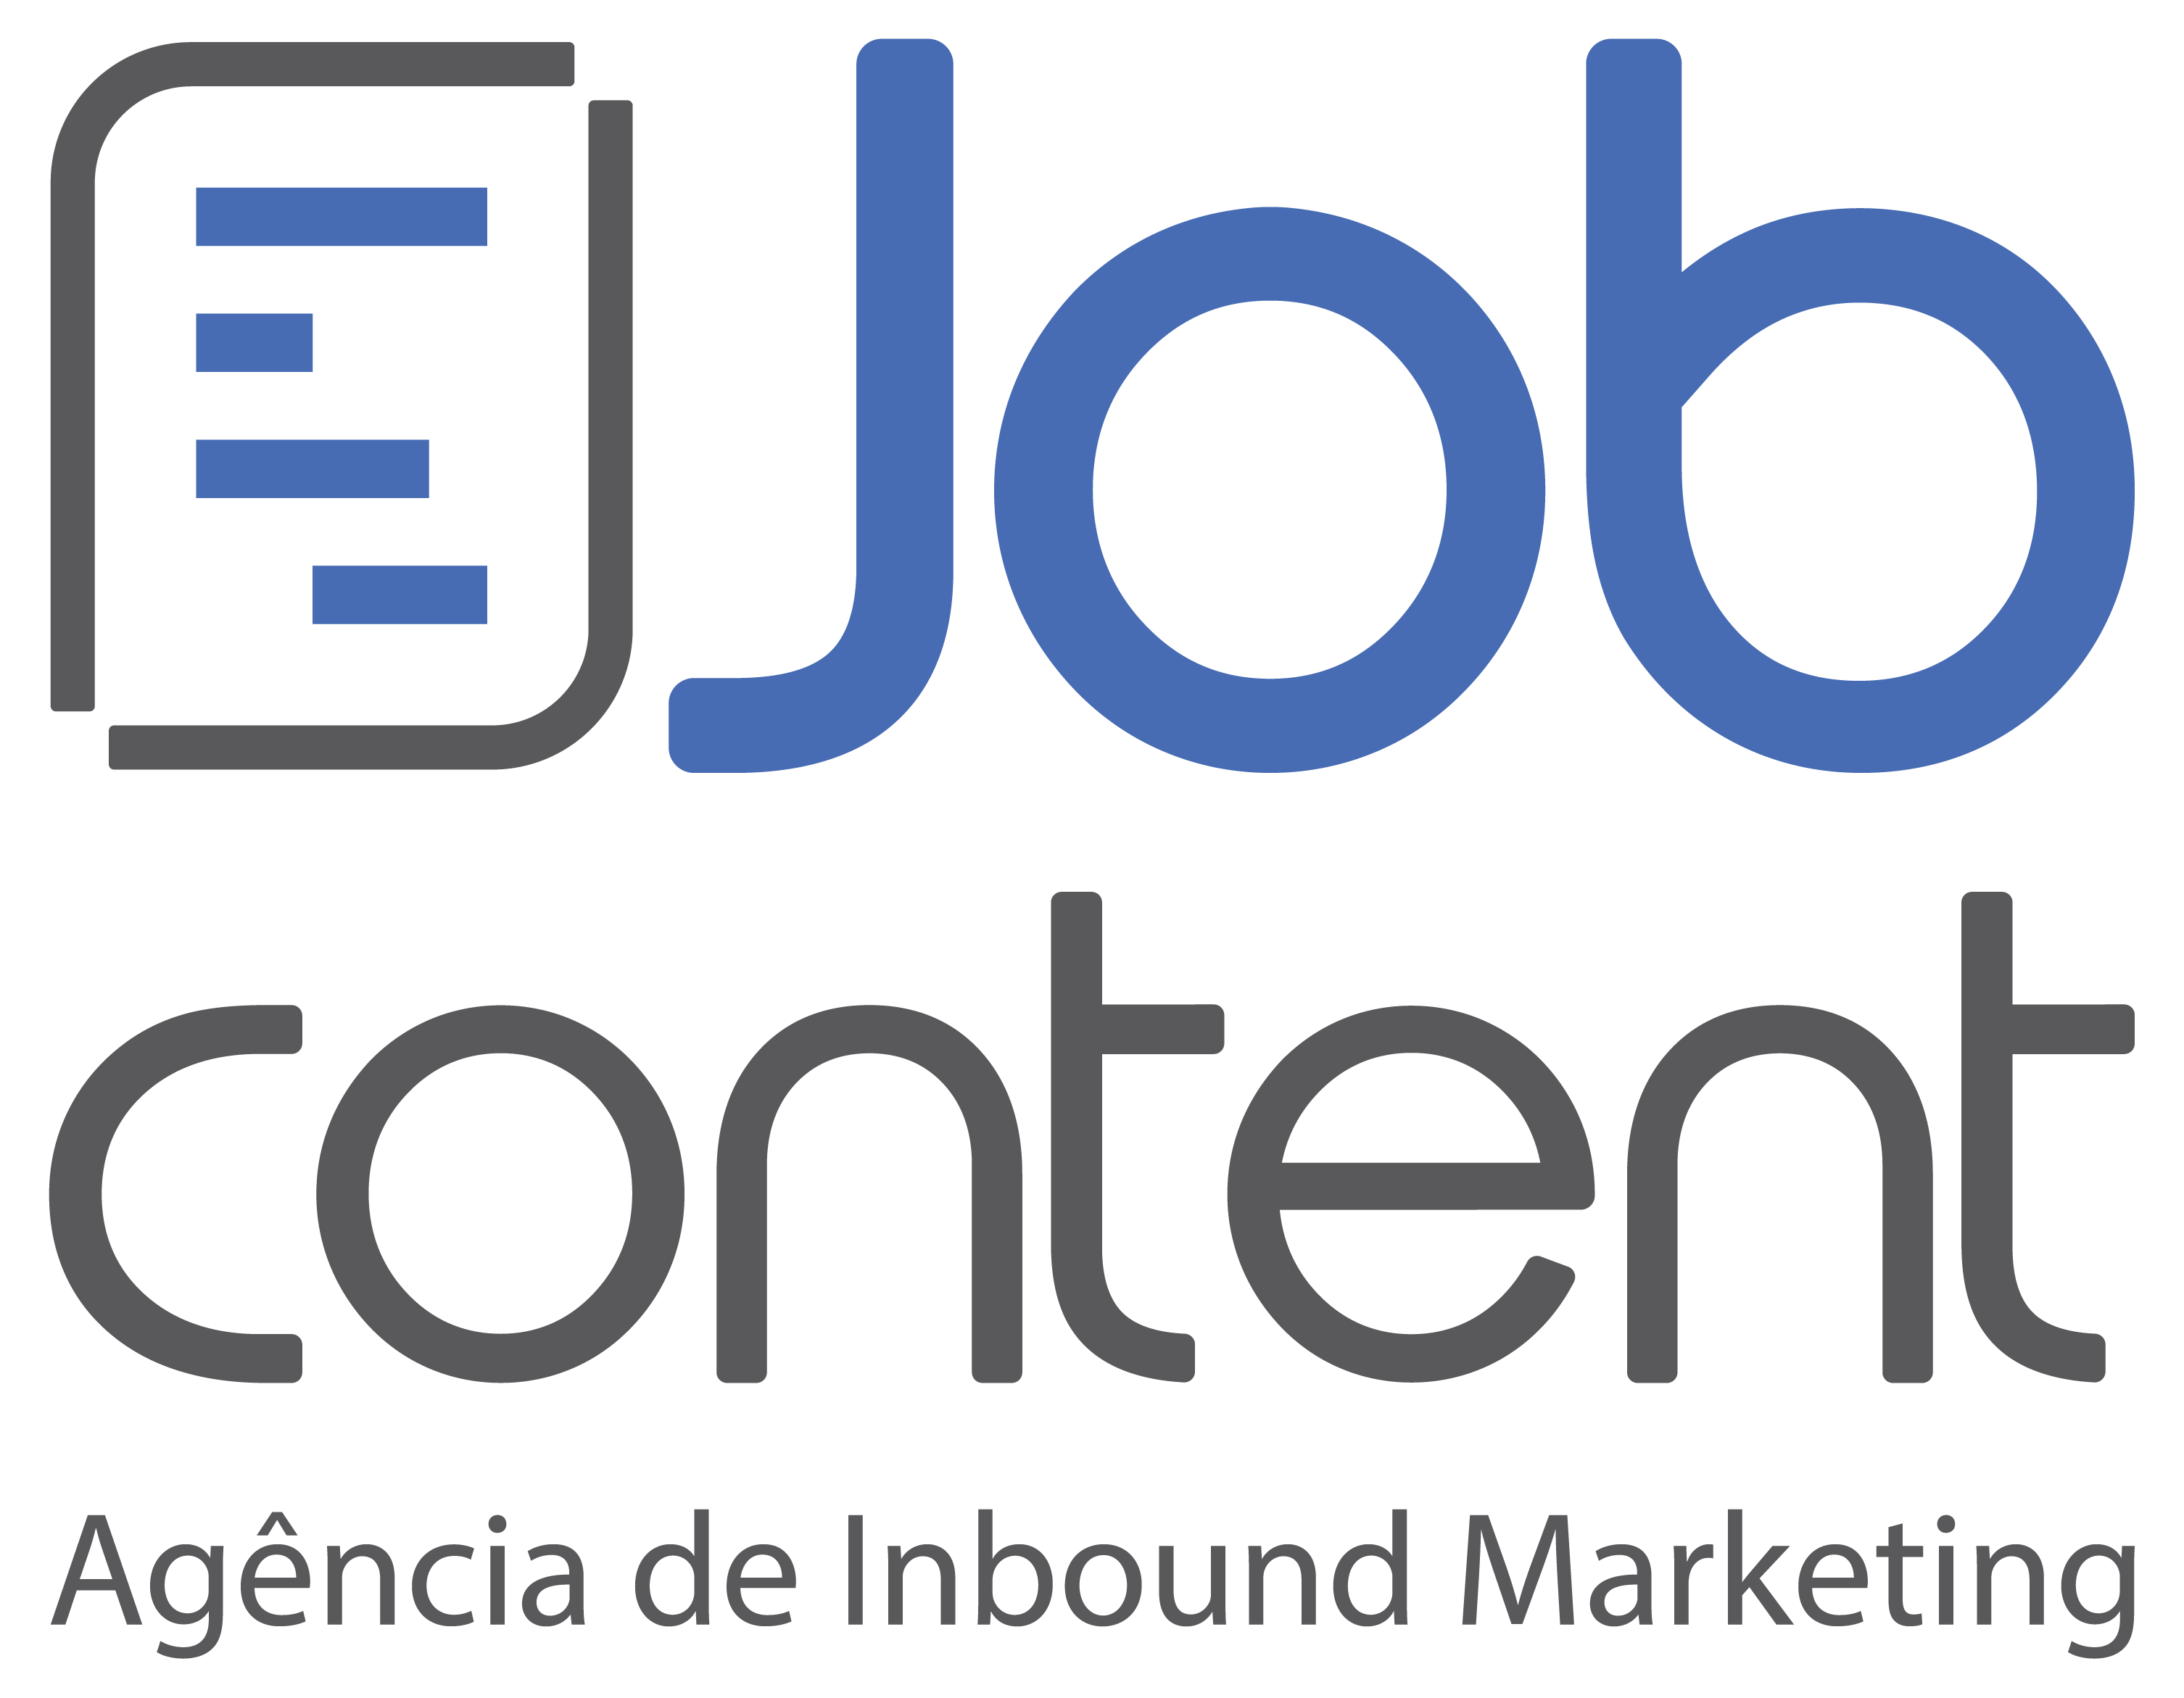 Agência de Inbound Marketing Job Content